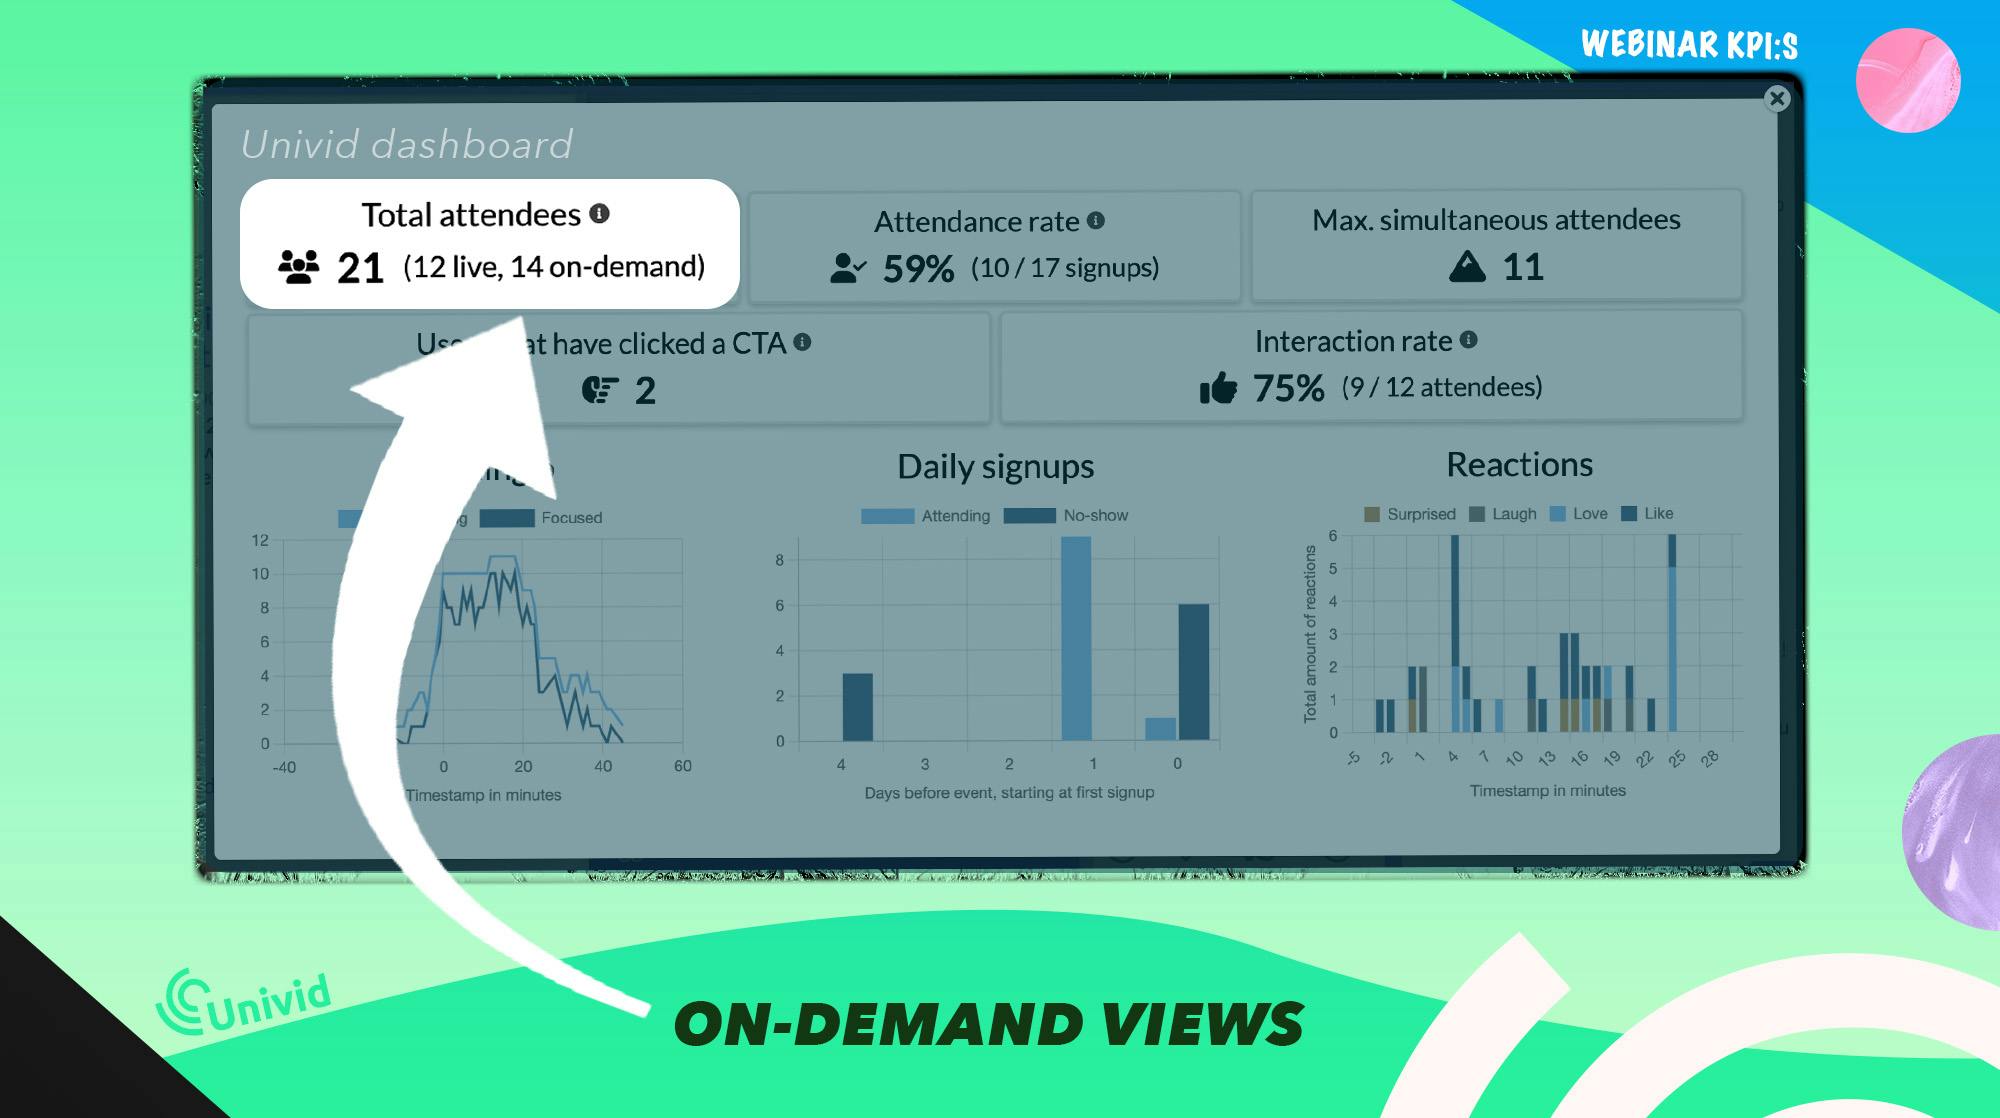 On-demand views - Webinar KPI:s